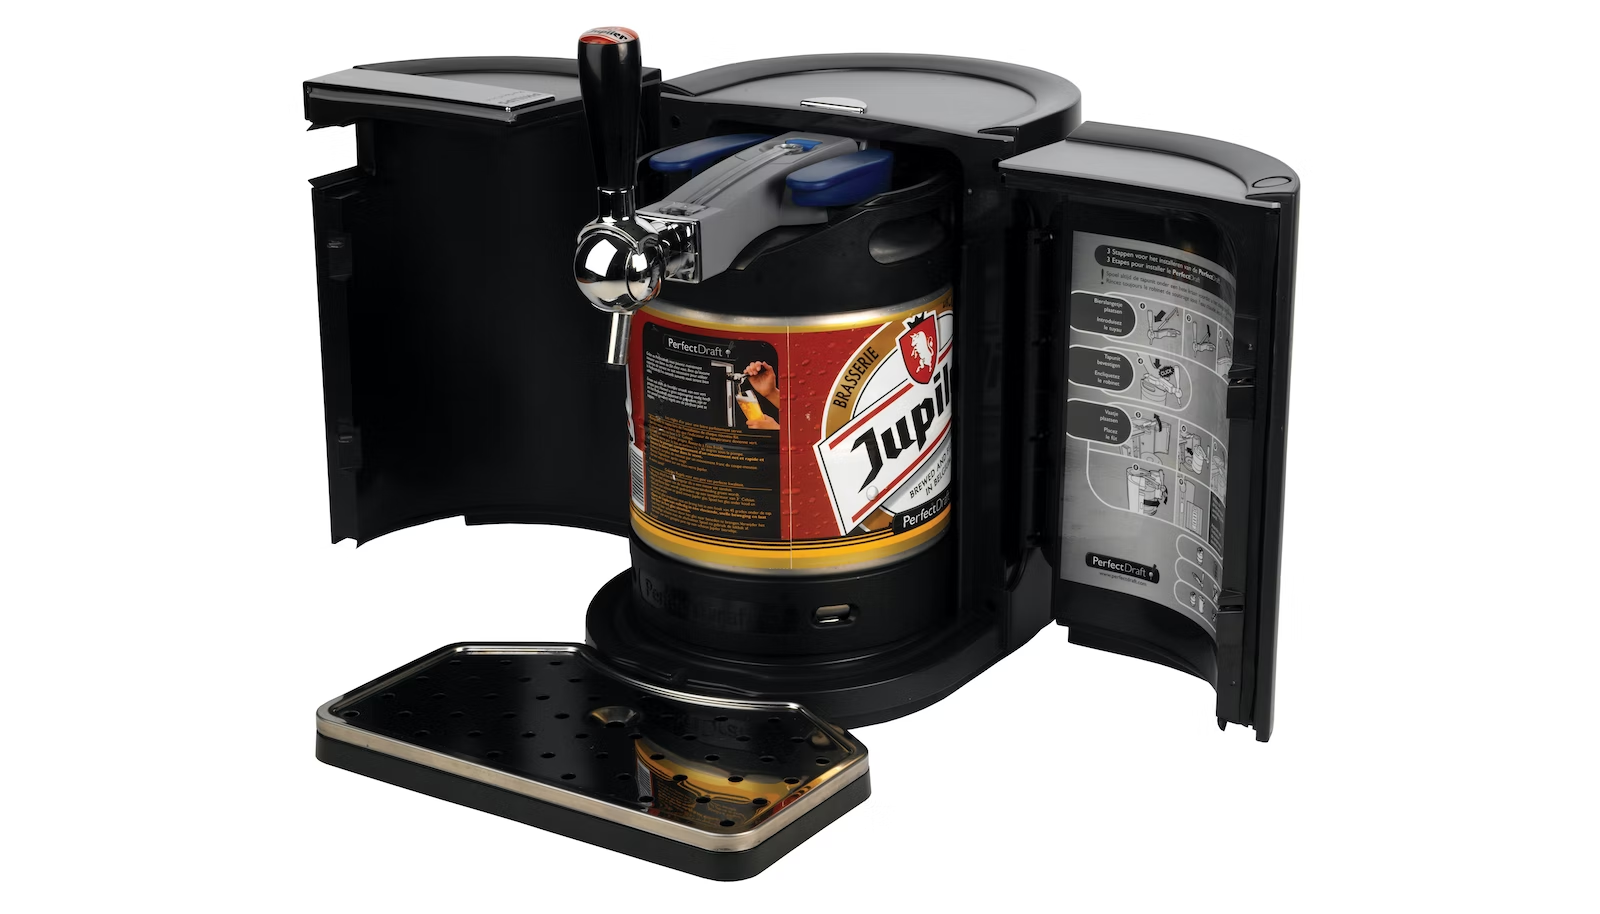 PerfectDraft beer dispenser - TTP